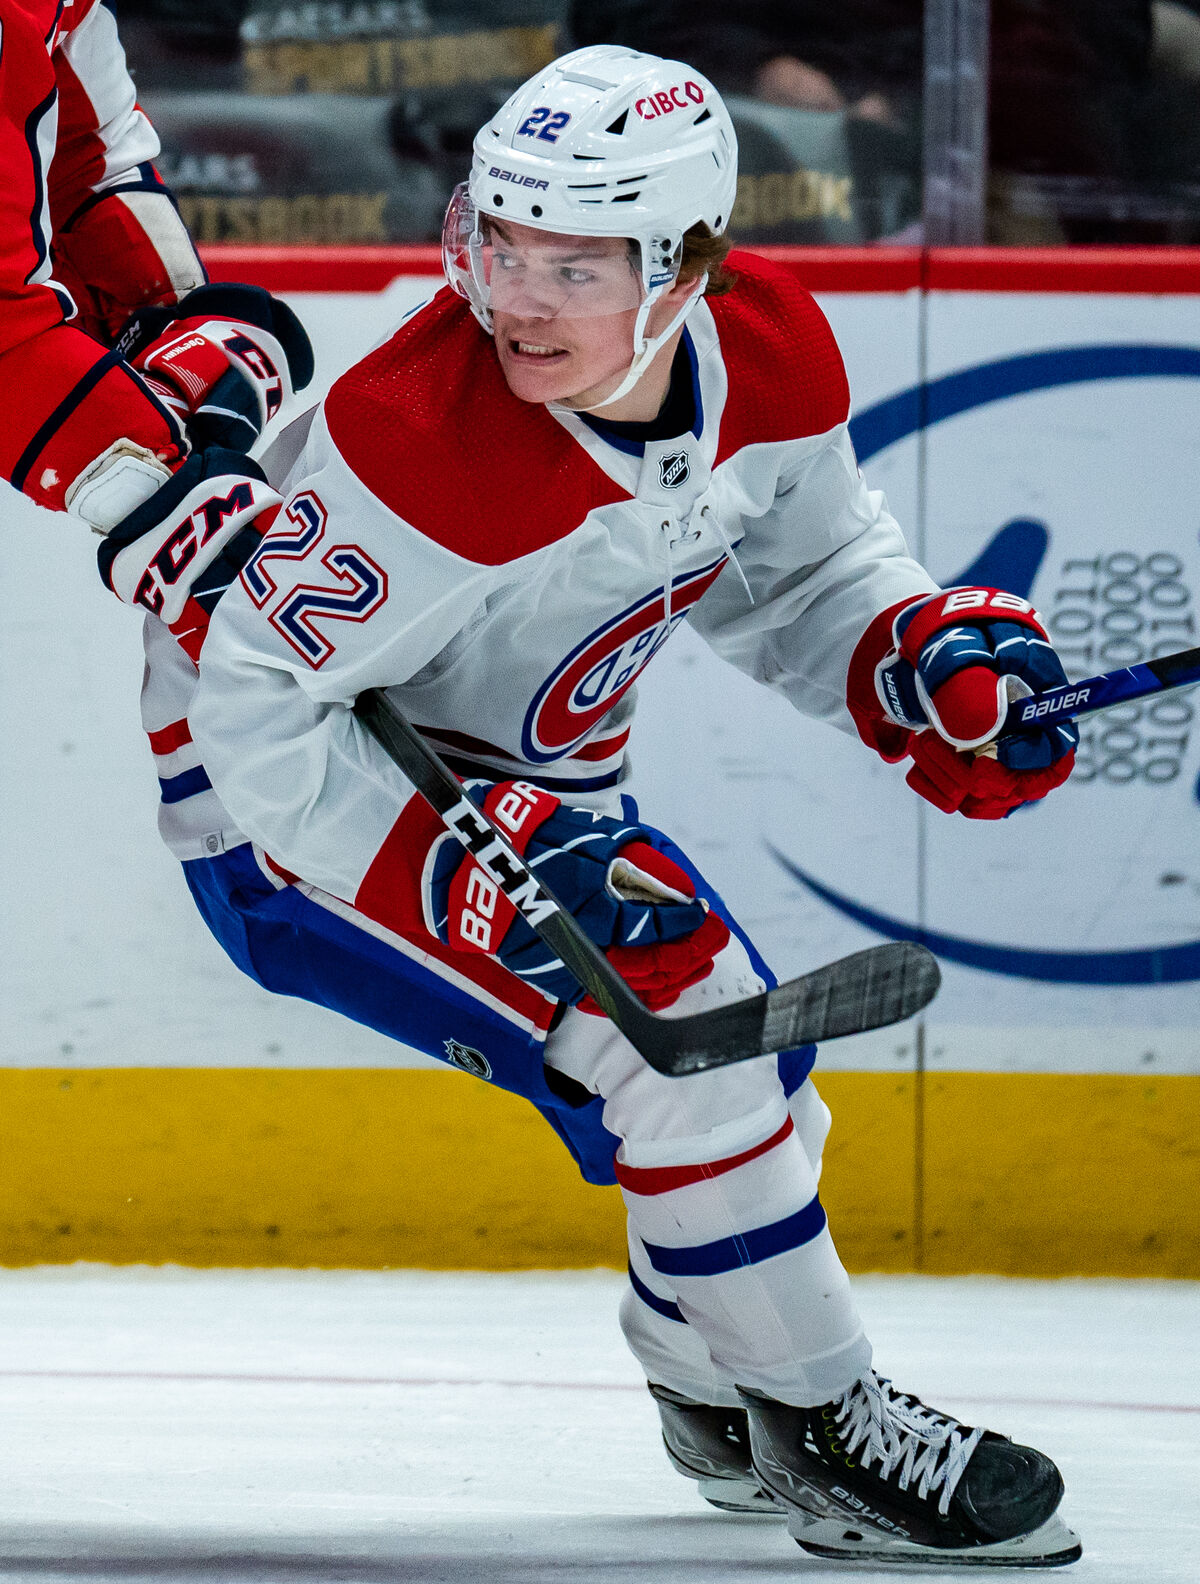 Justin Johnson (ice hockey) - Wikipedia